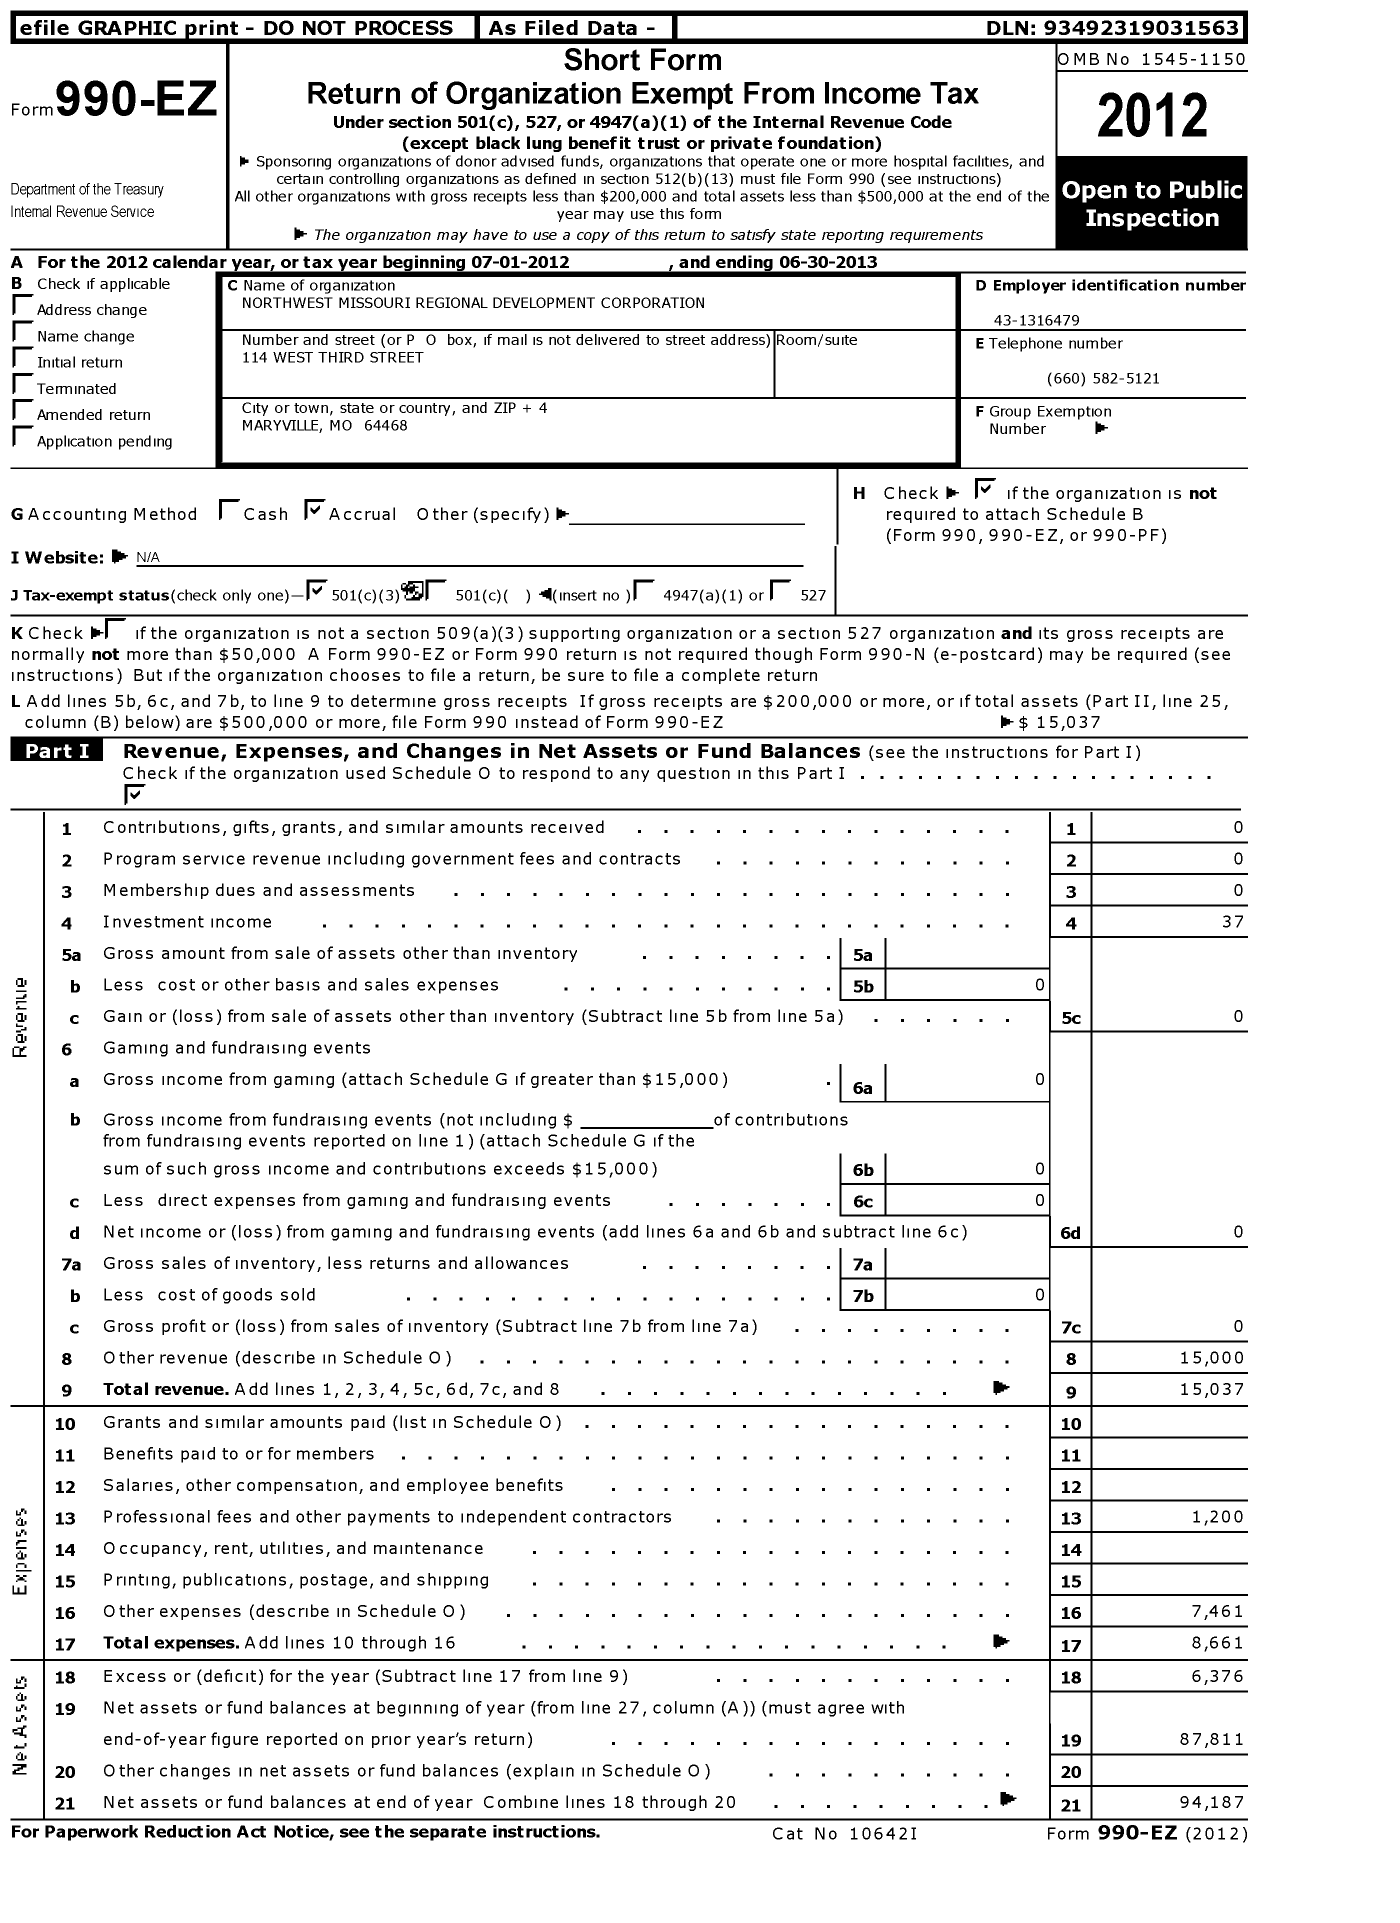 Image of first page of 2012 Form 990EZ for Northwest Missouri Regional Development Corporation